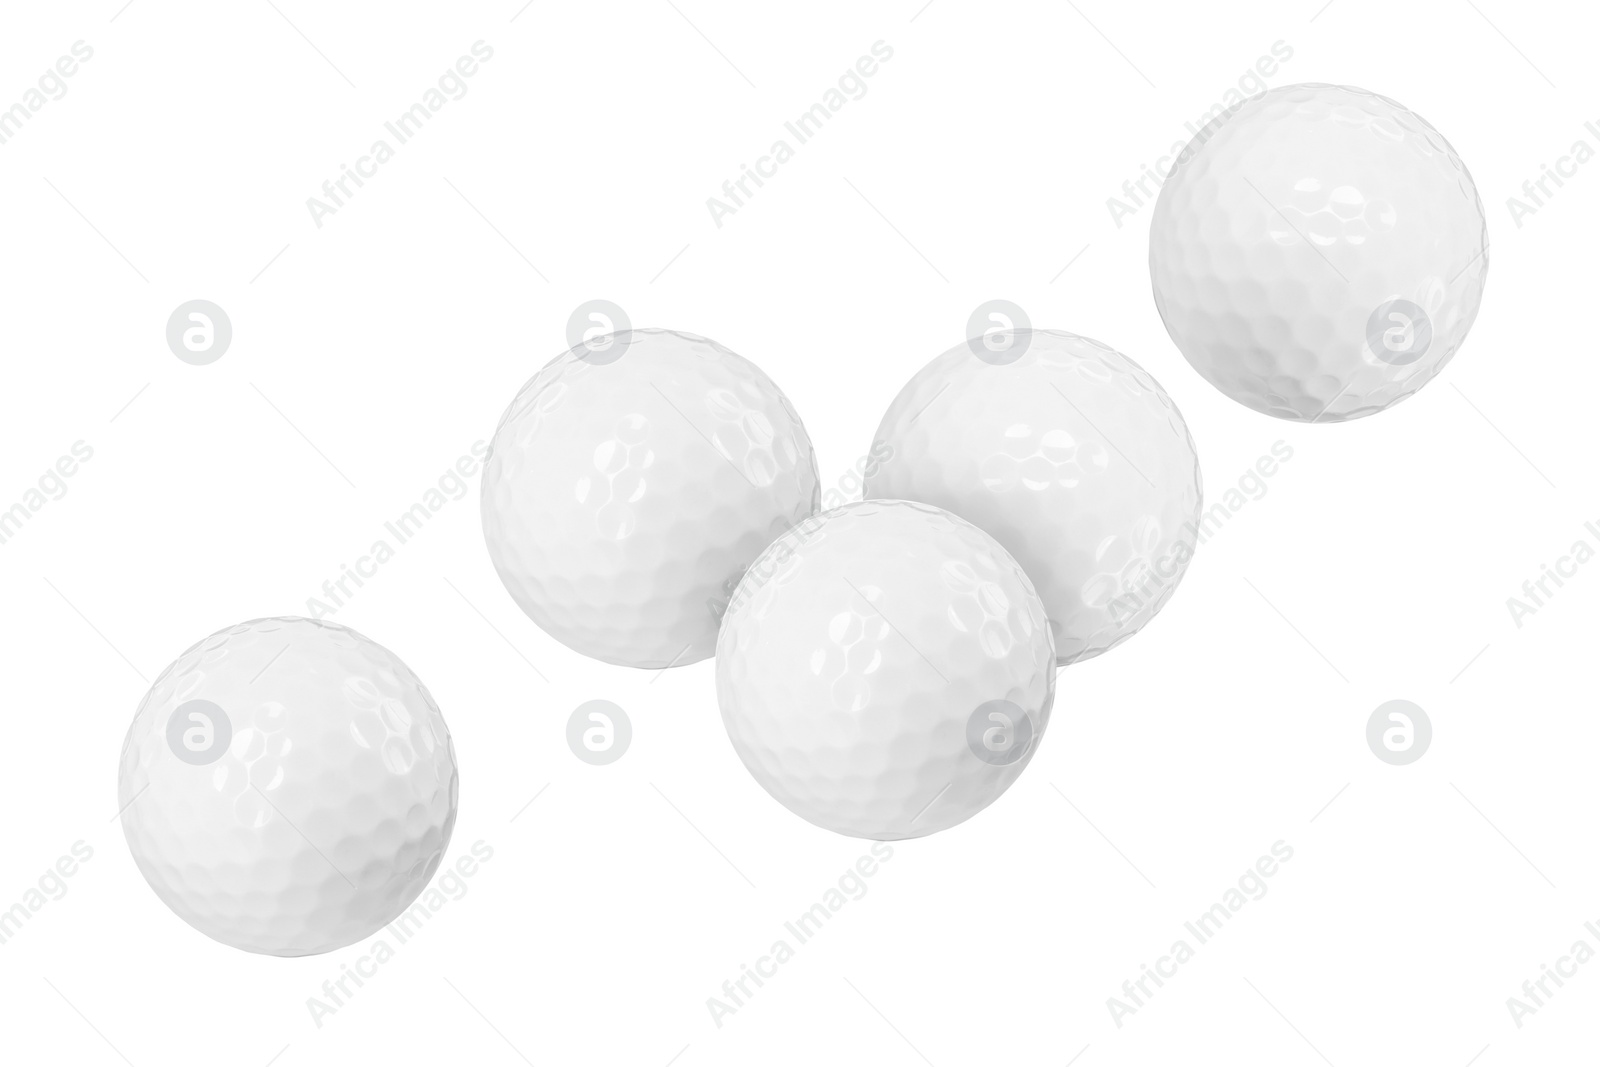 Image of Many golf balls flying on white background